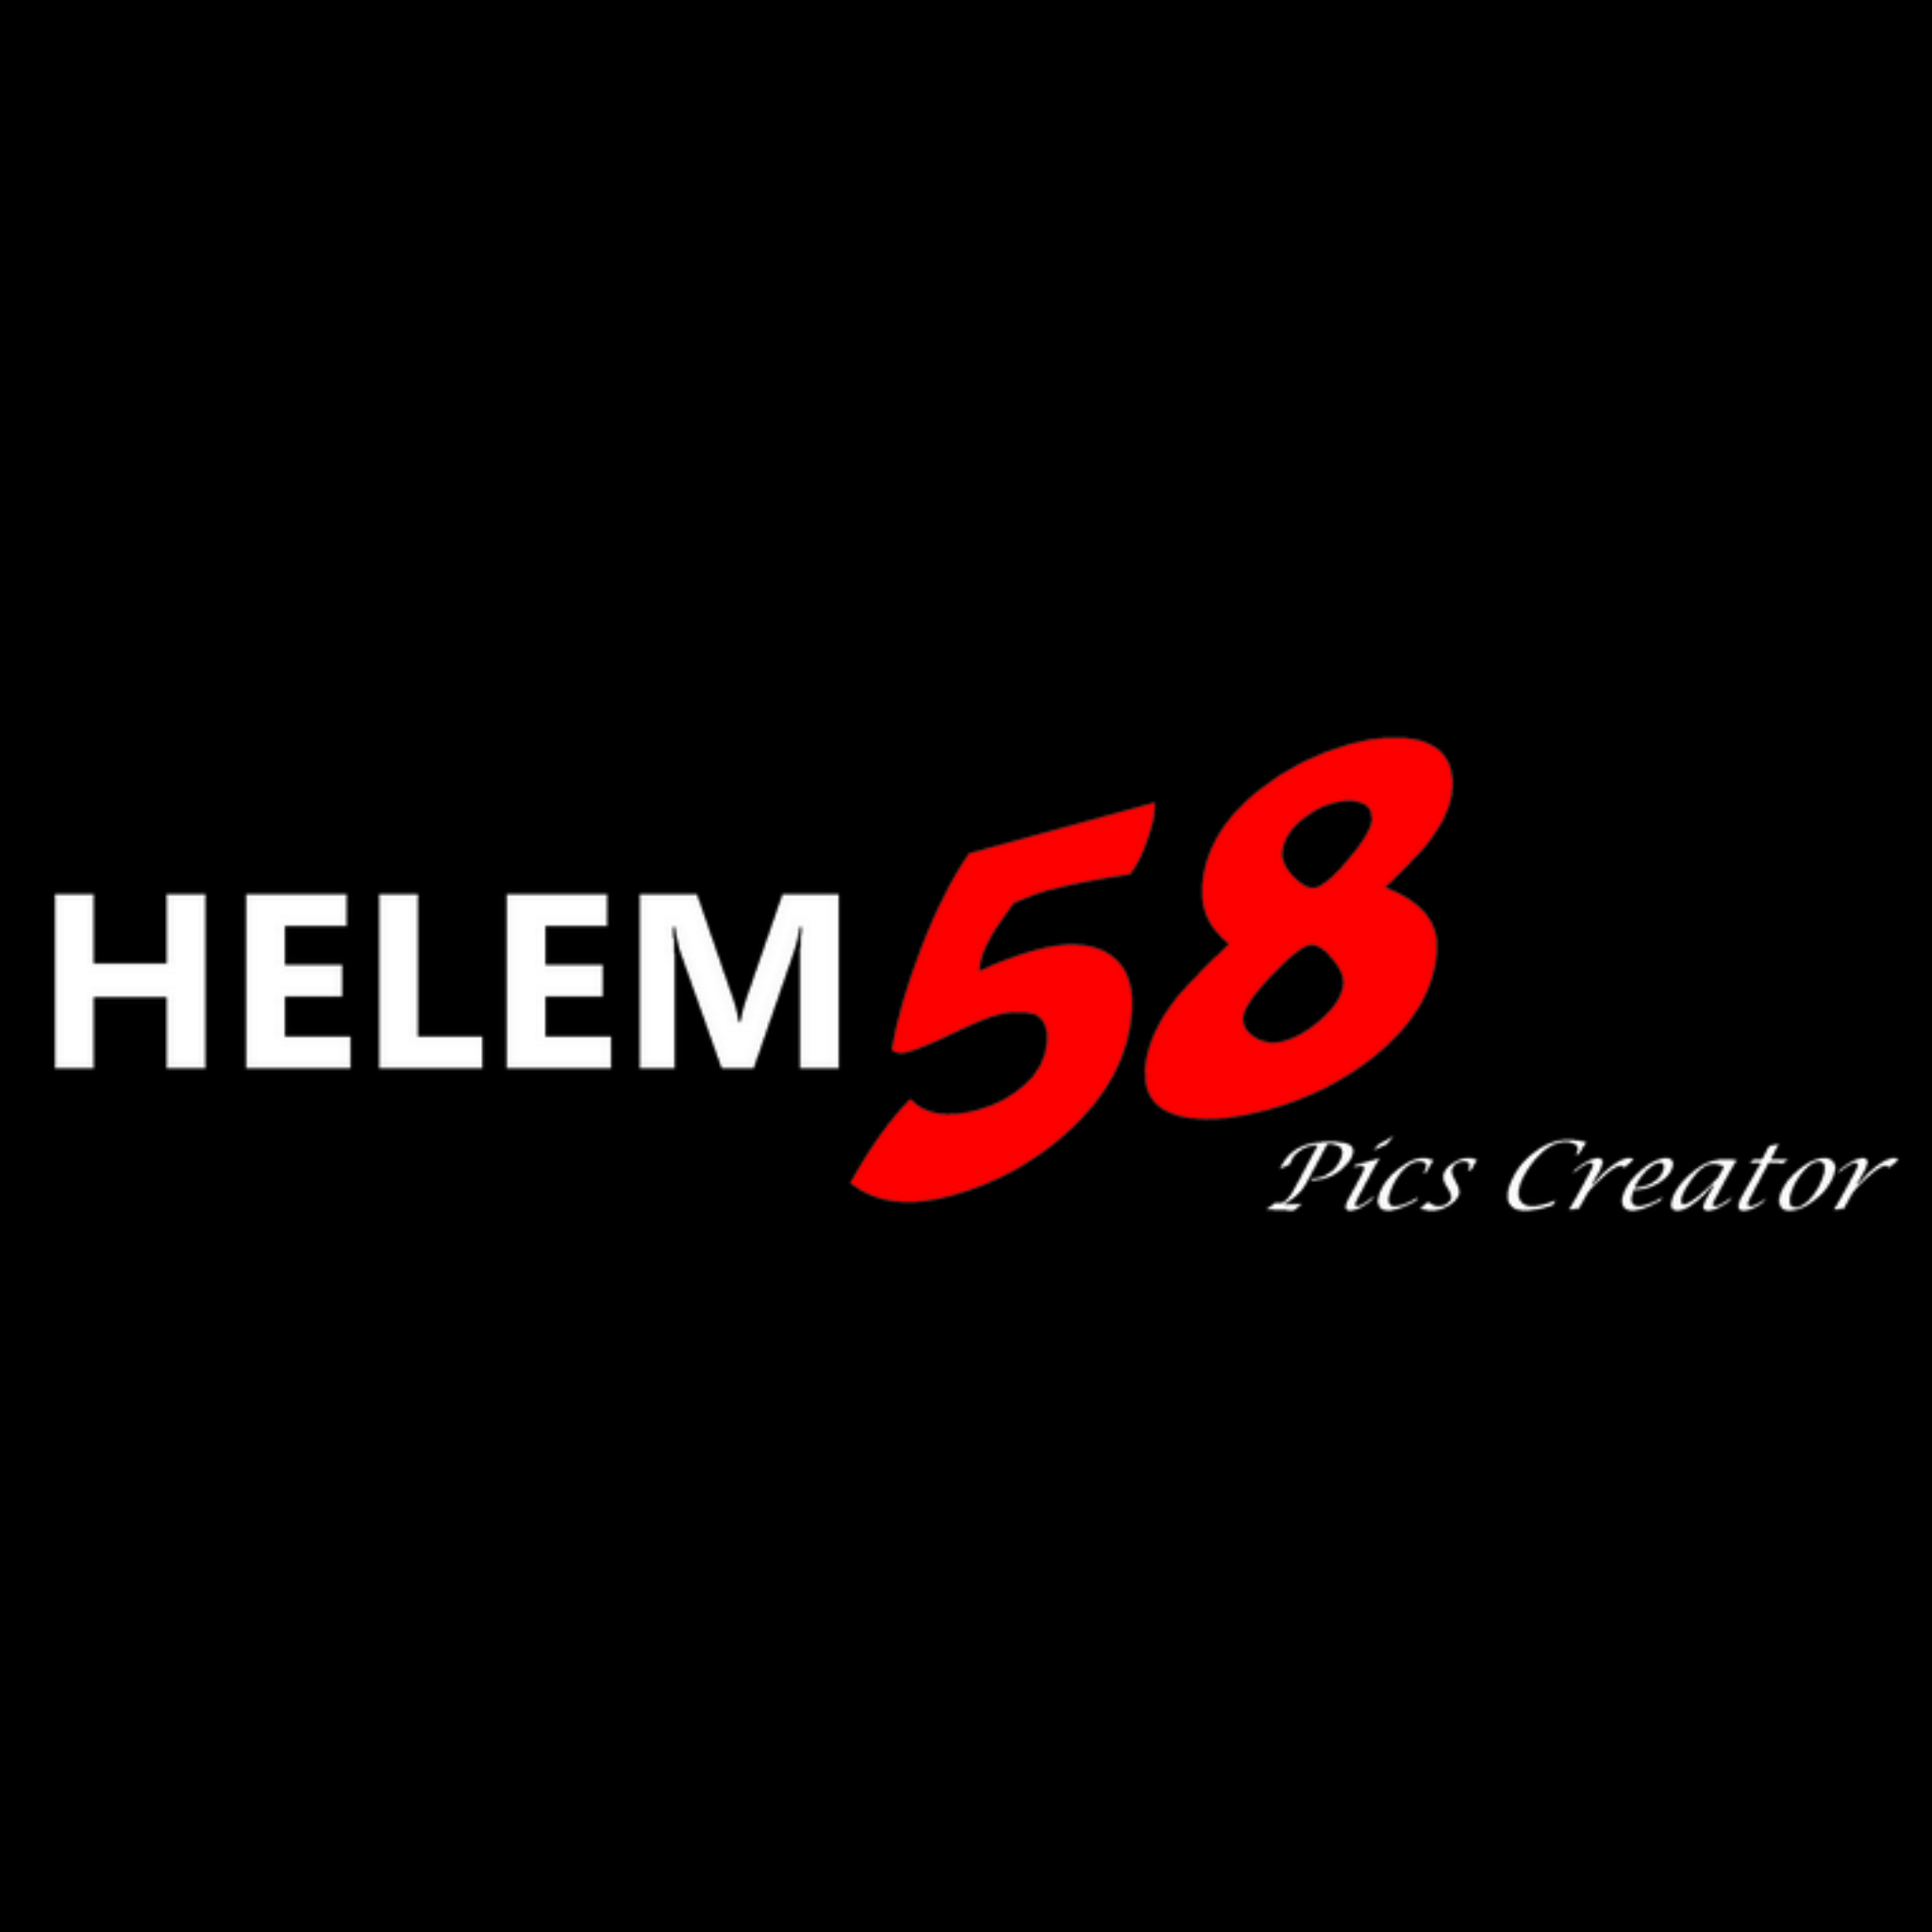 Helem 58 Pics Creator